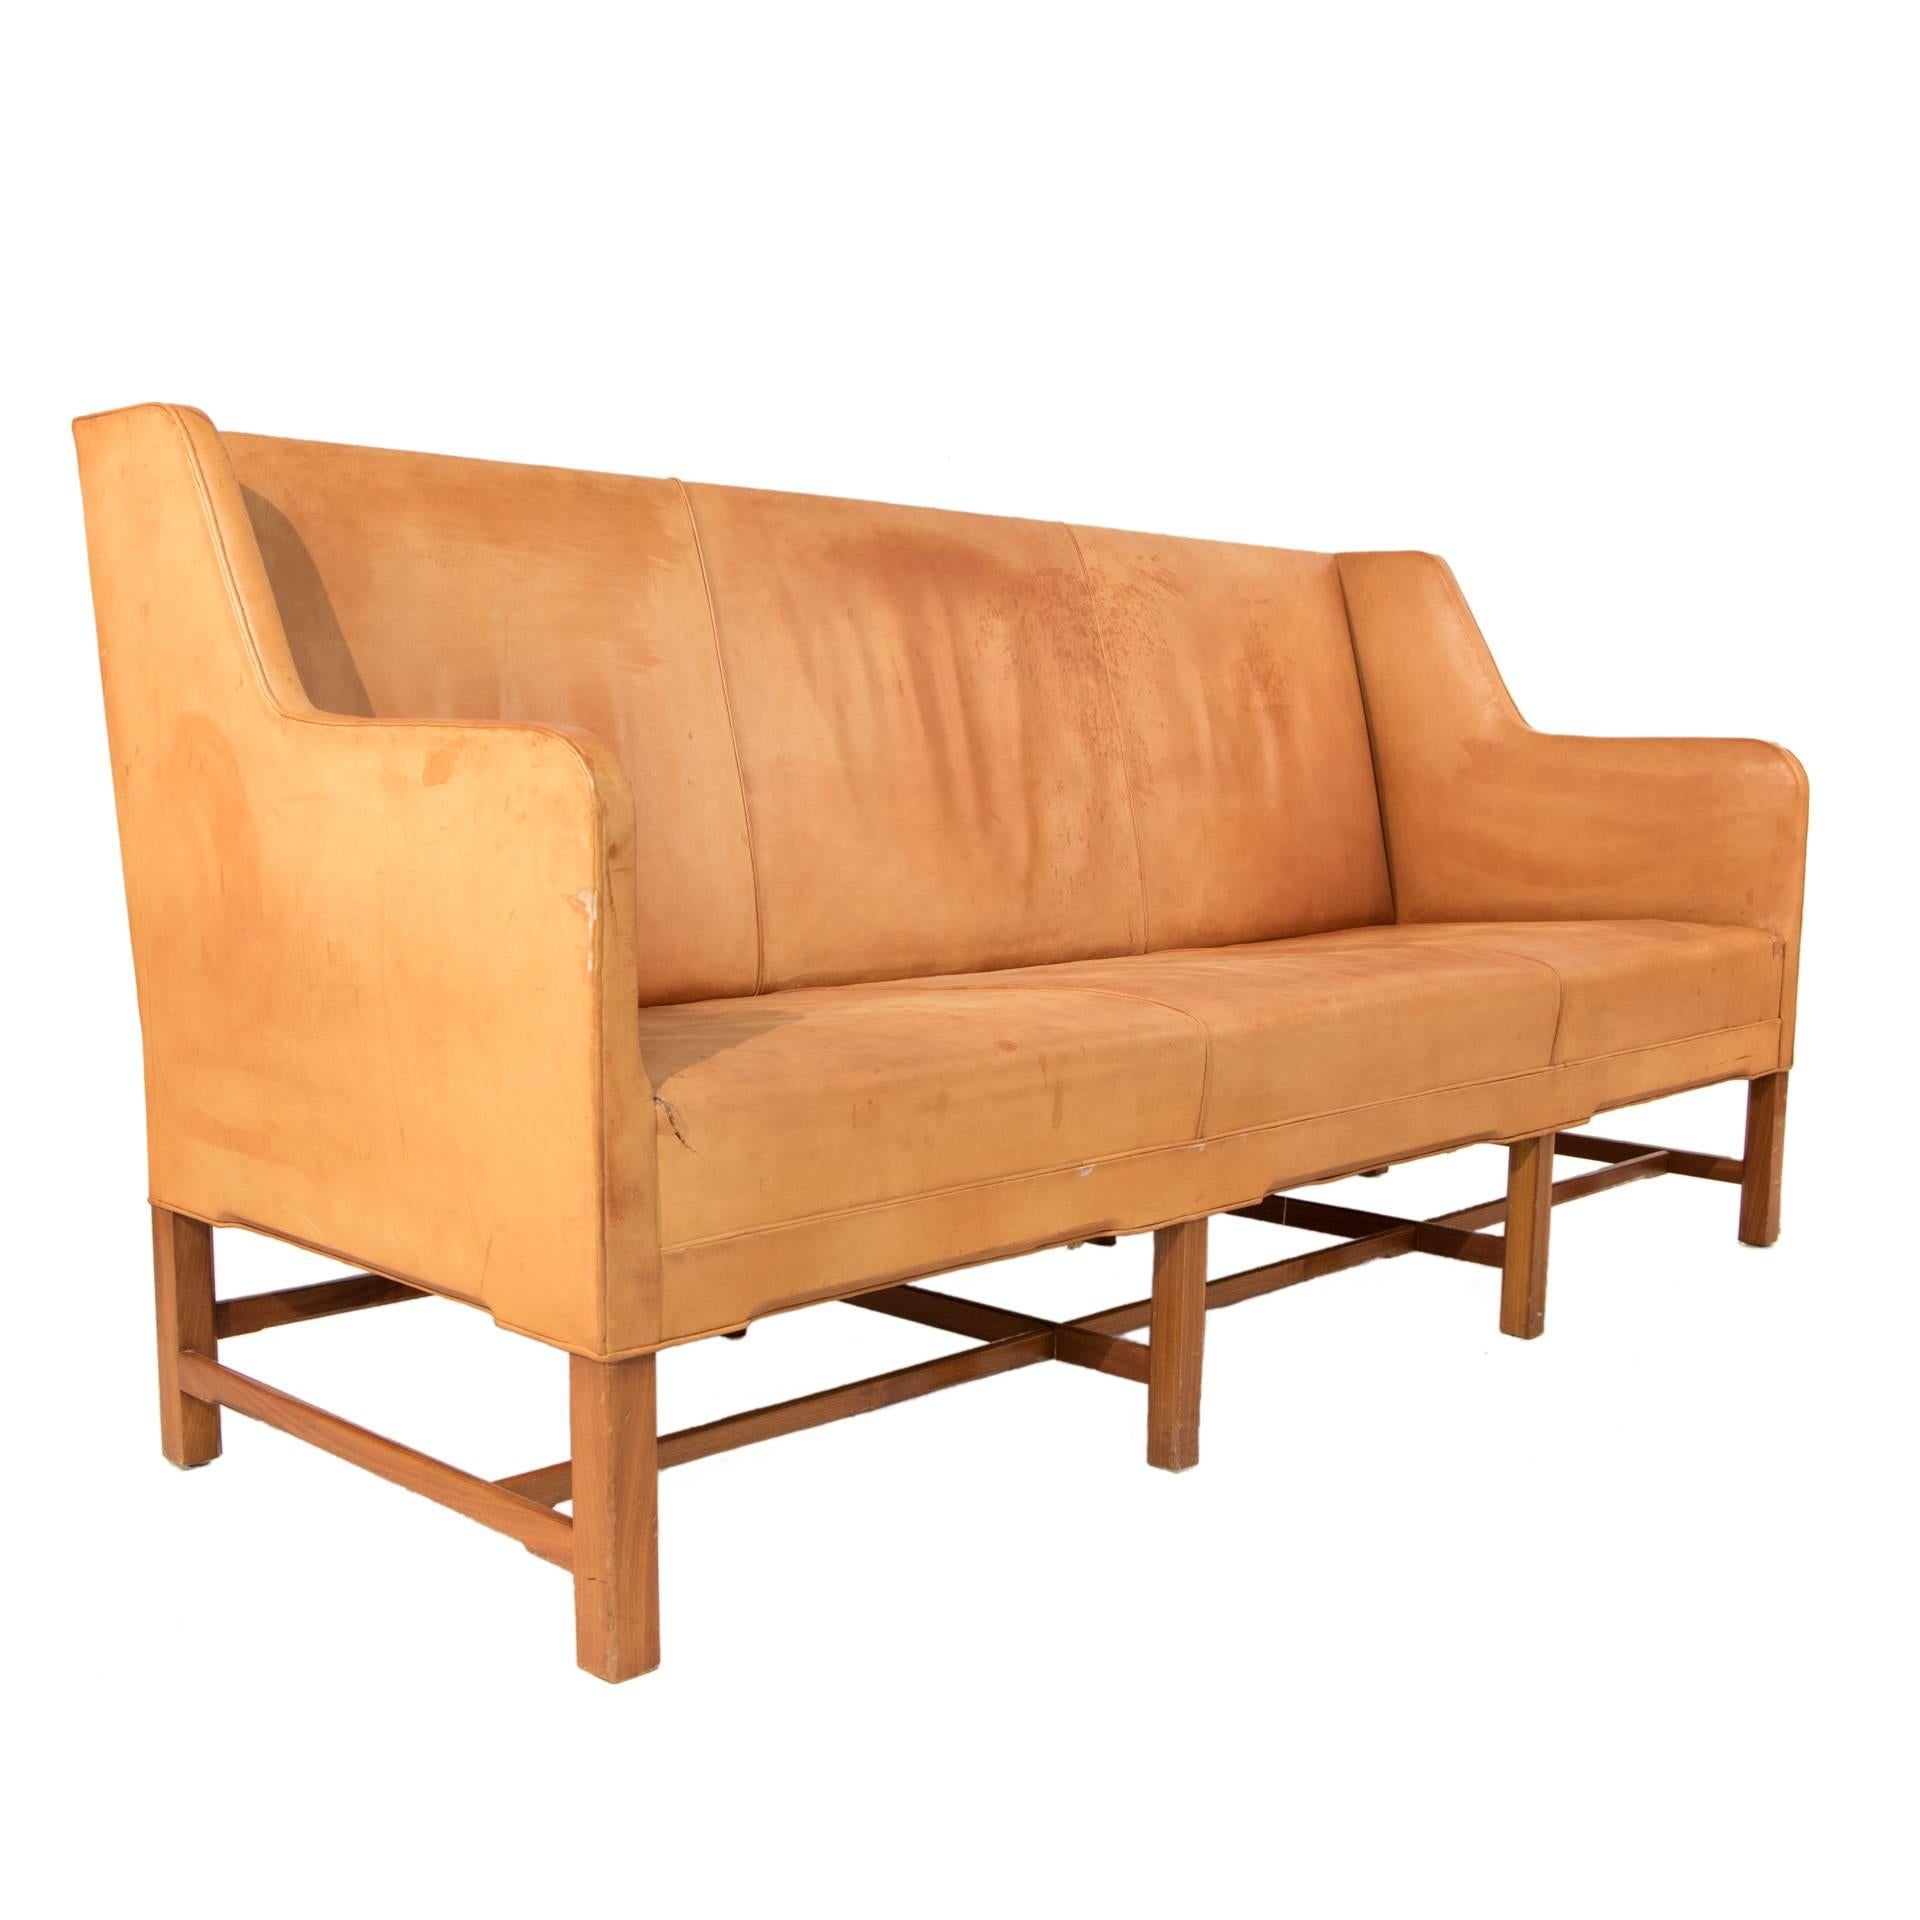 Leather sofa by Kaare Klint.